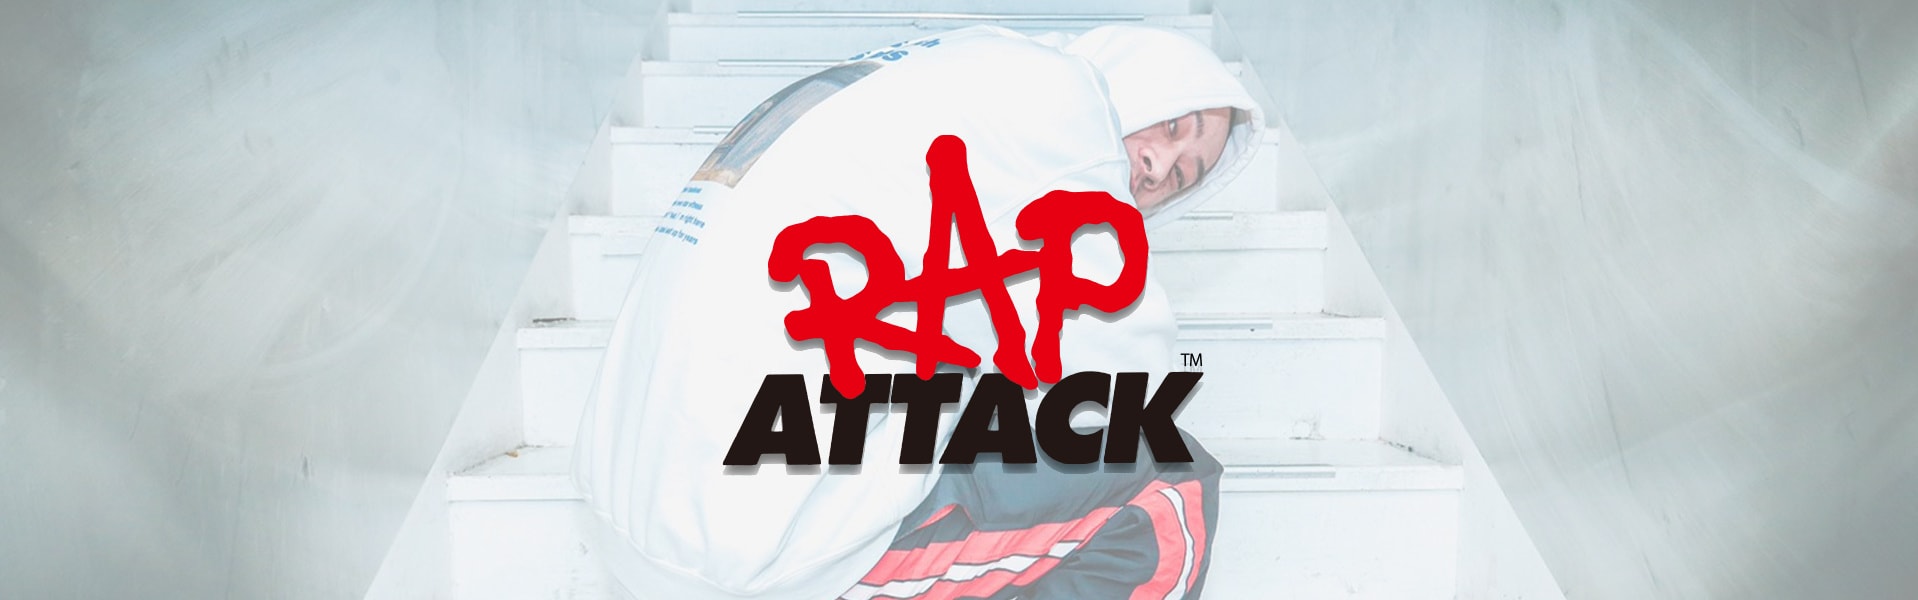 RAP ATTACK ロゴ